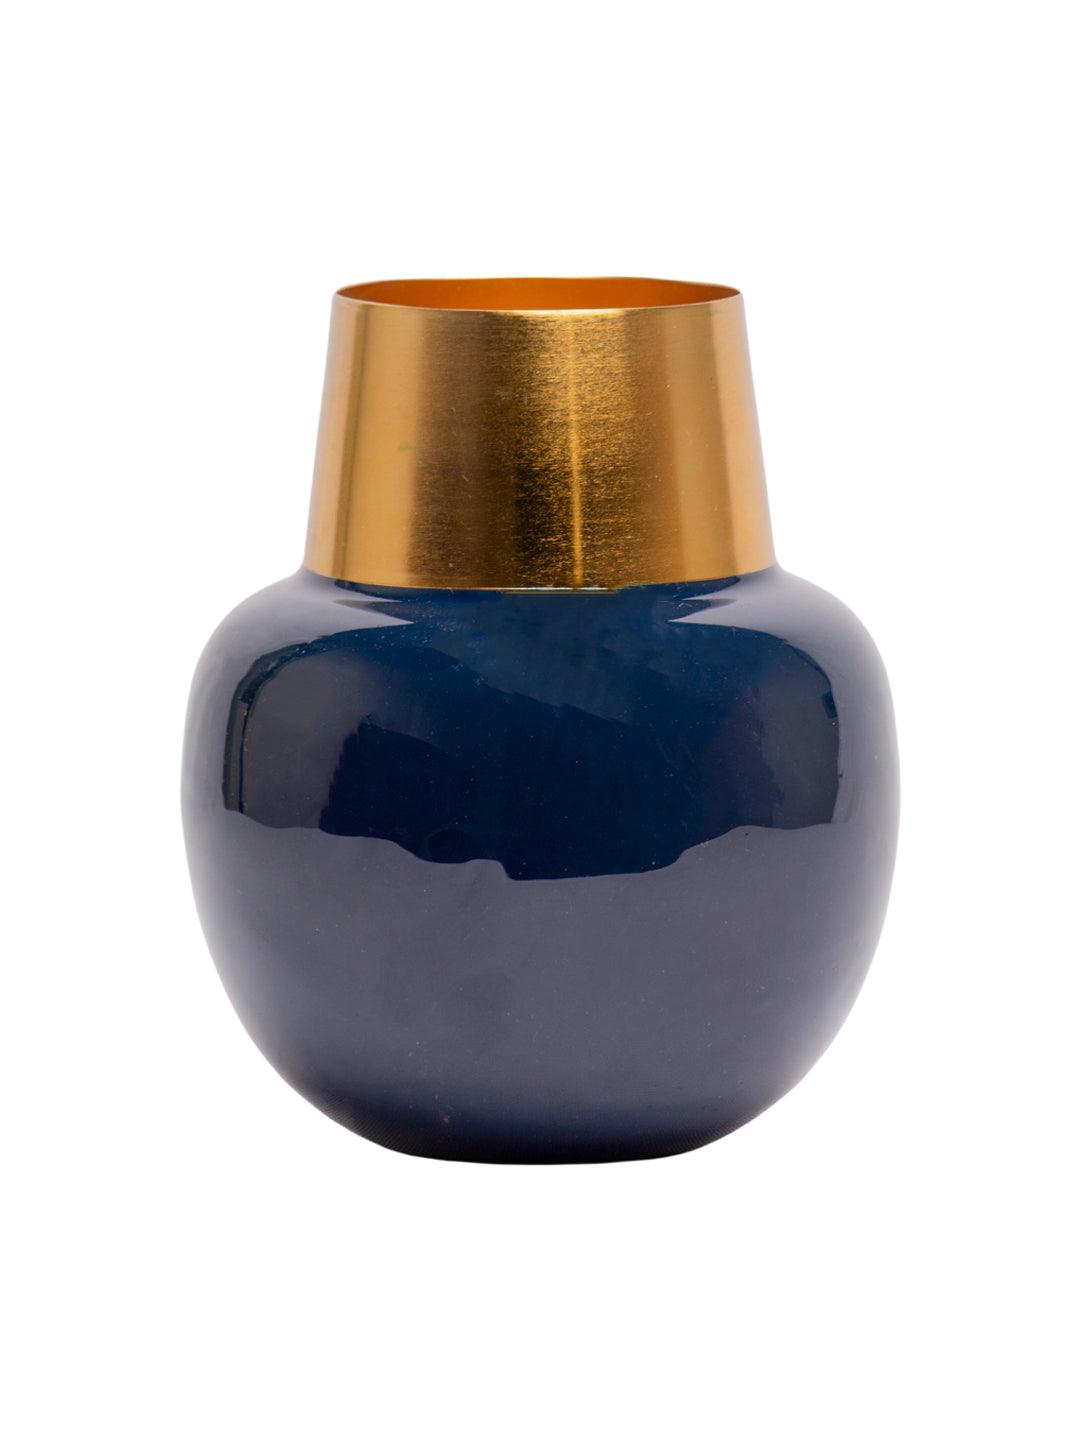 Decorative Enamel Vase - Golden & Blue - MARKET 99